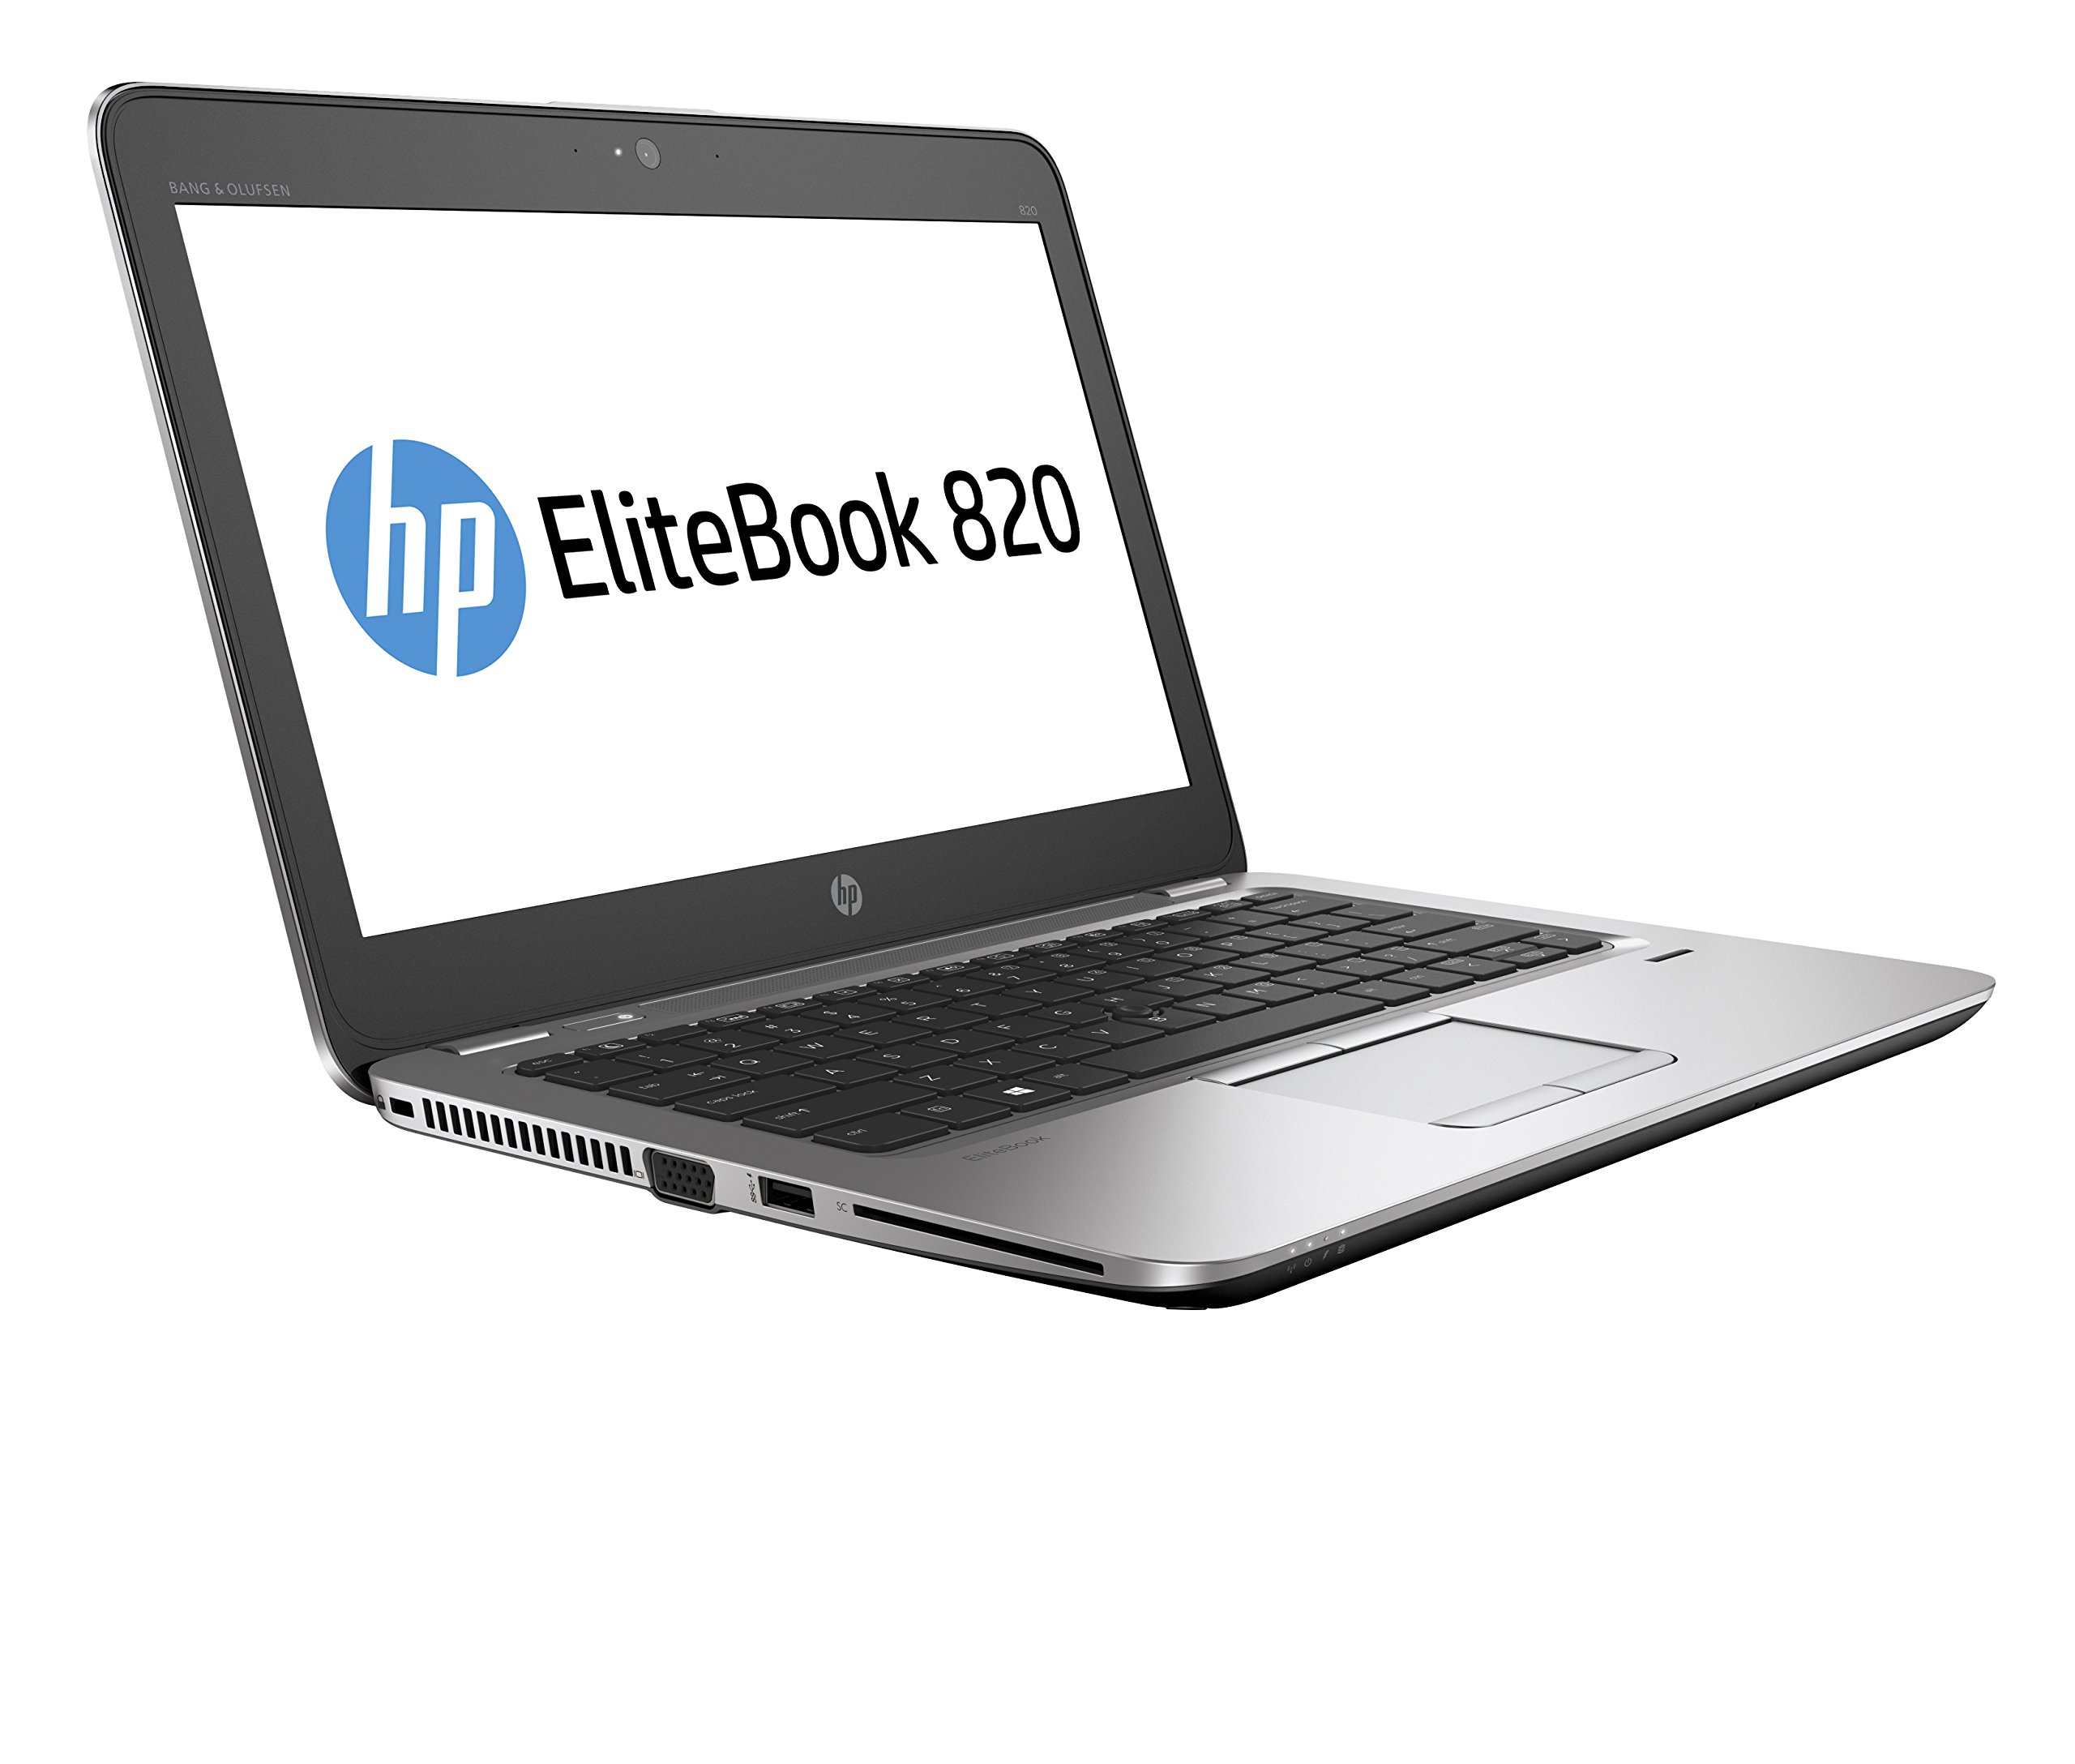 HP EliteBook 820 G3 Notebook